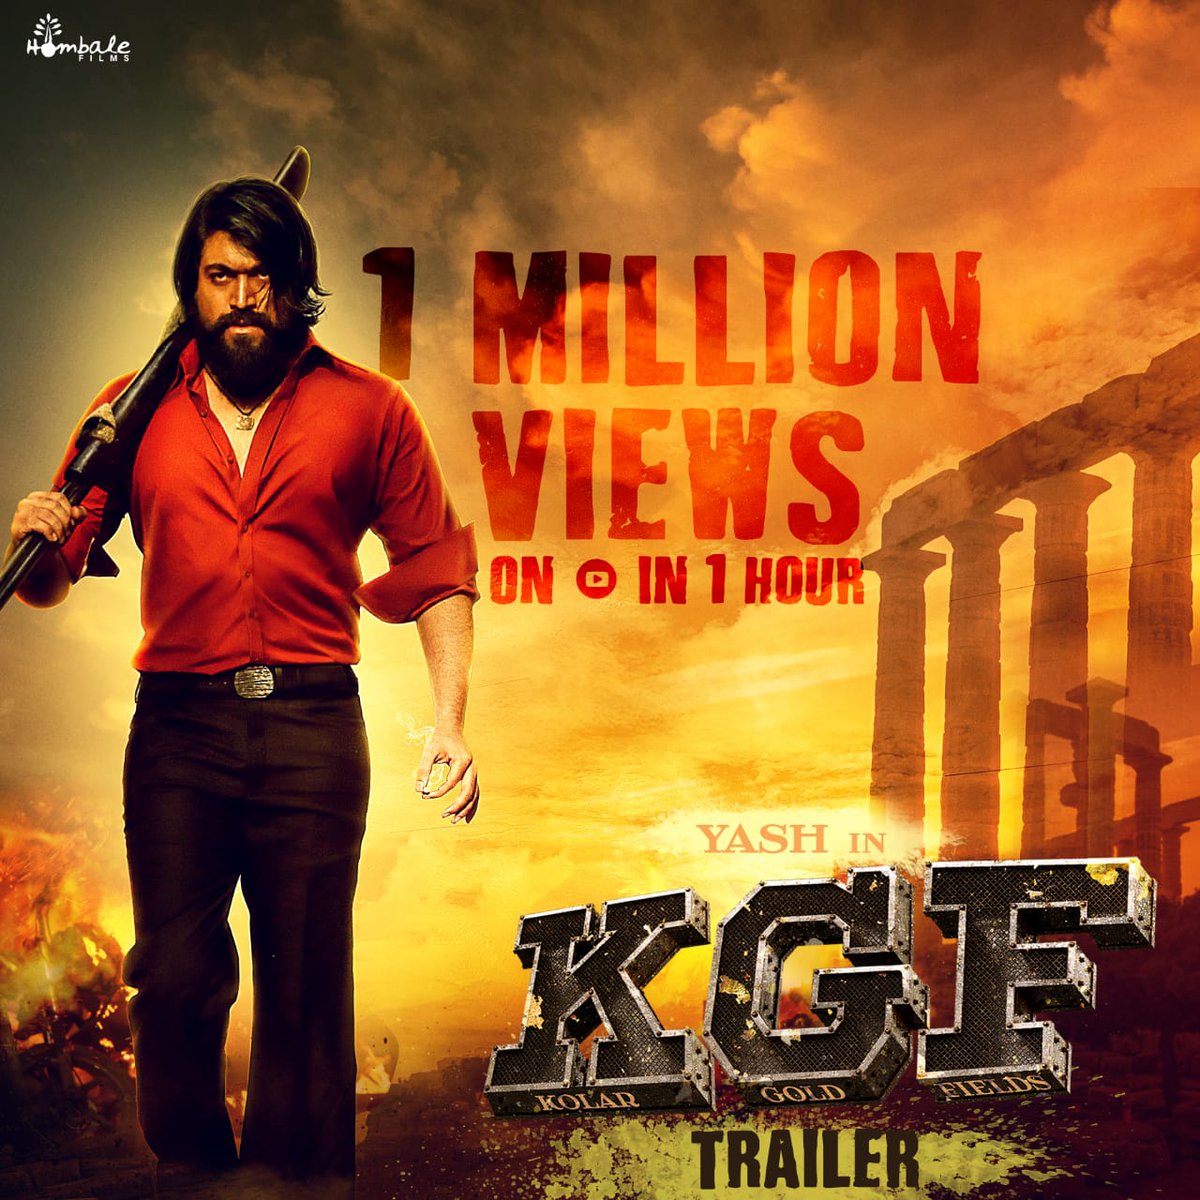 Kannada Movies On Twitter 1 Million Digital Views For Kgf